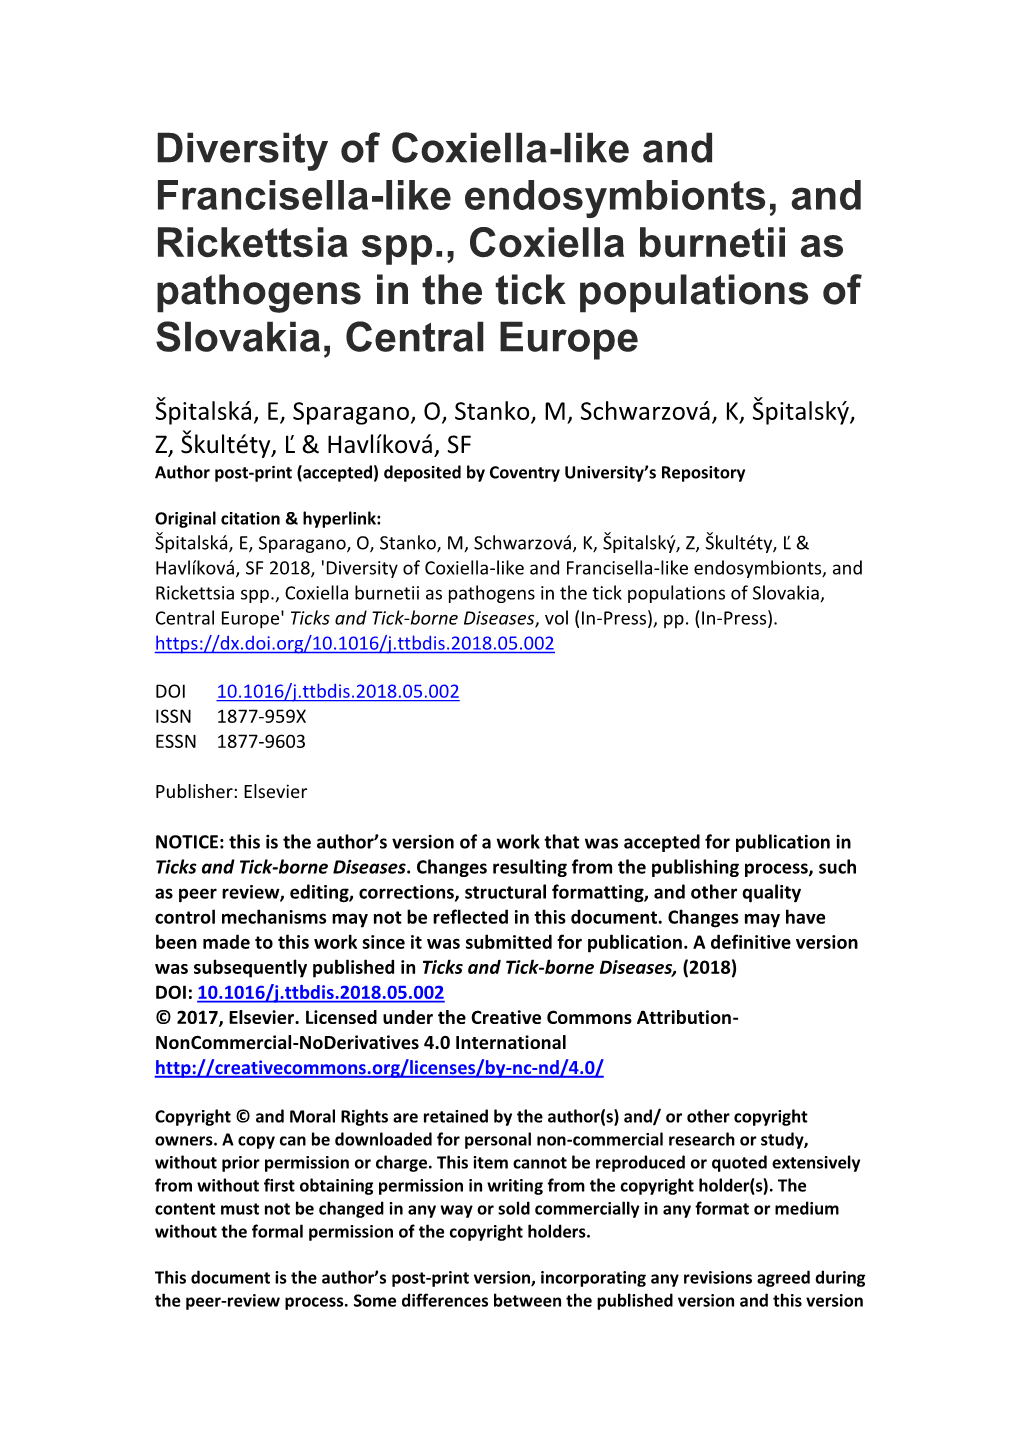 Diversity of Coxiella-Like and Francisella-Like Endosymbionts